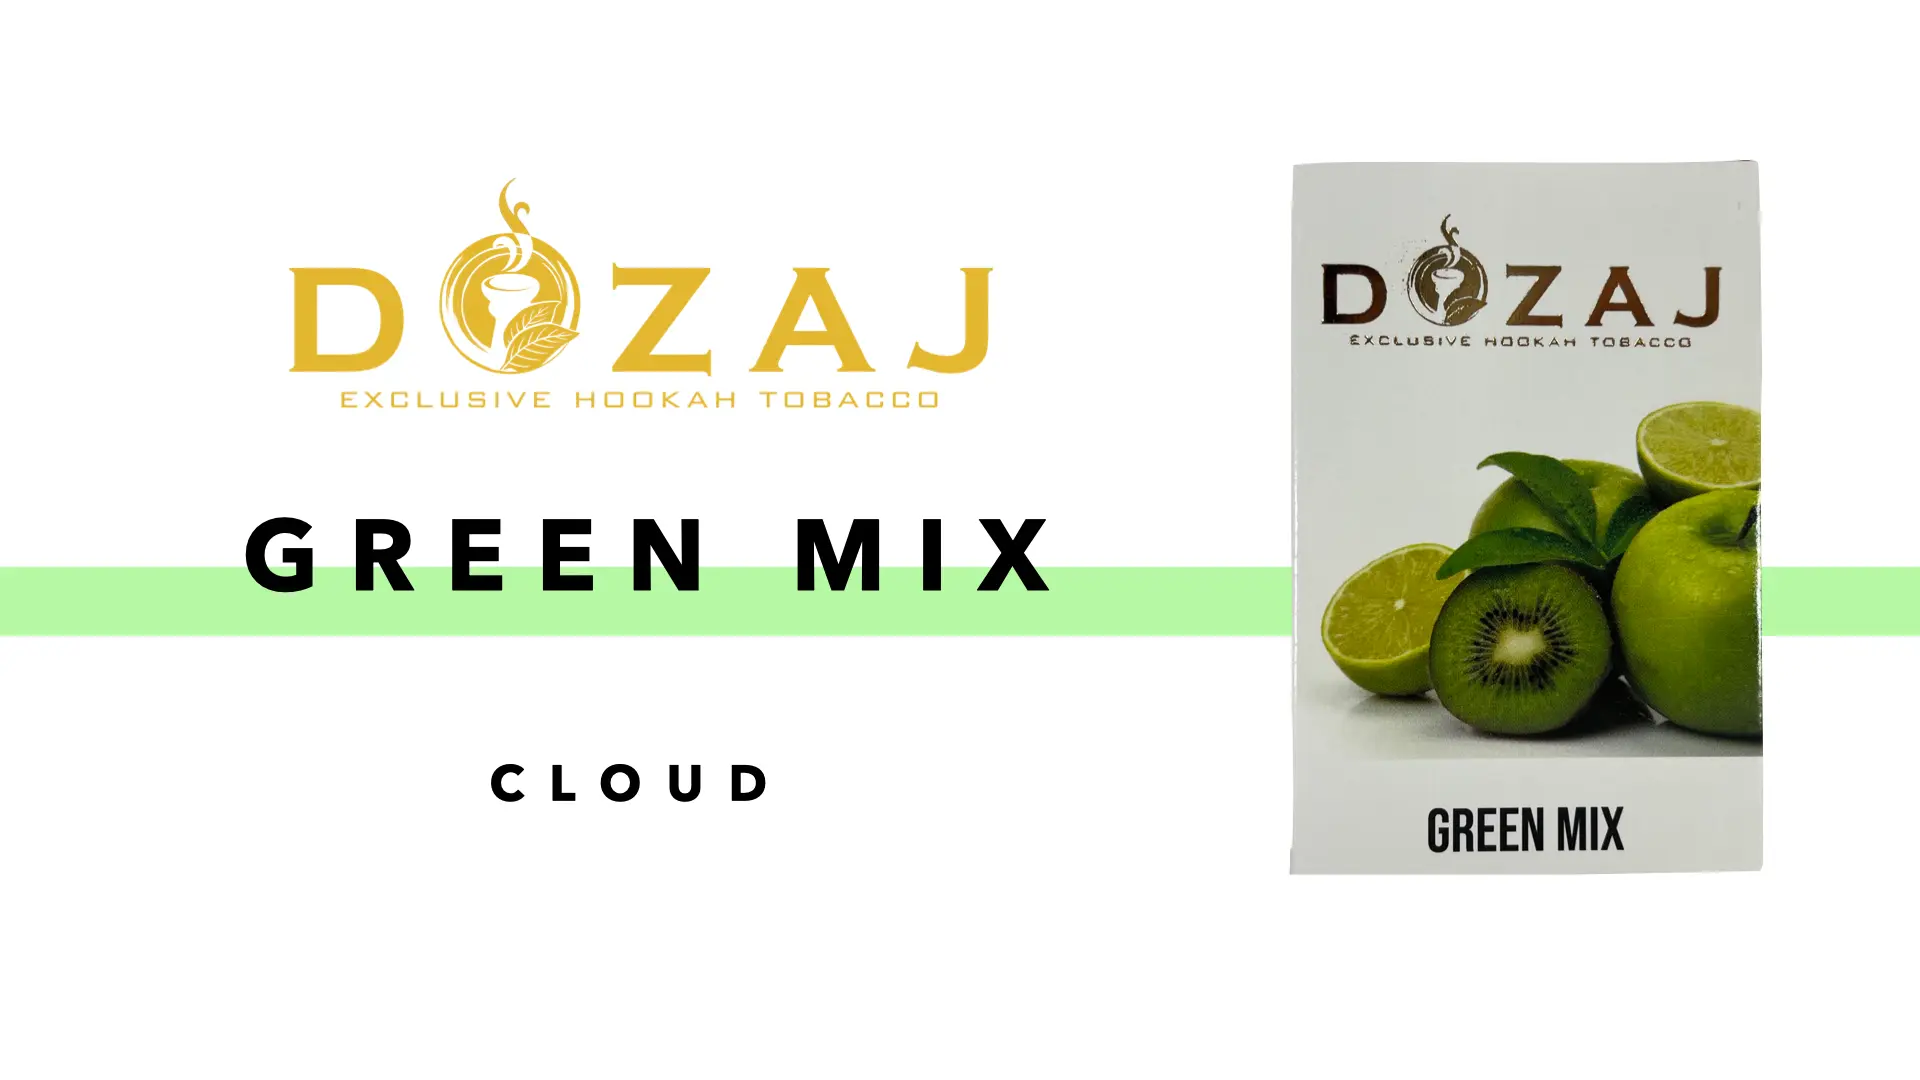 DOZAJ - Green Mix(グリーンミックス)レビュー